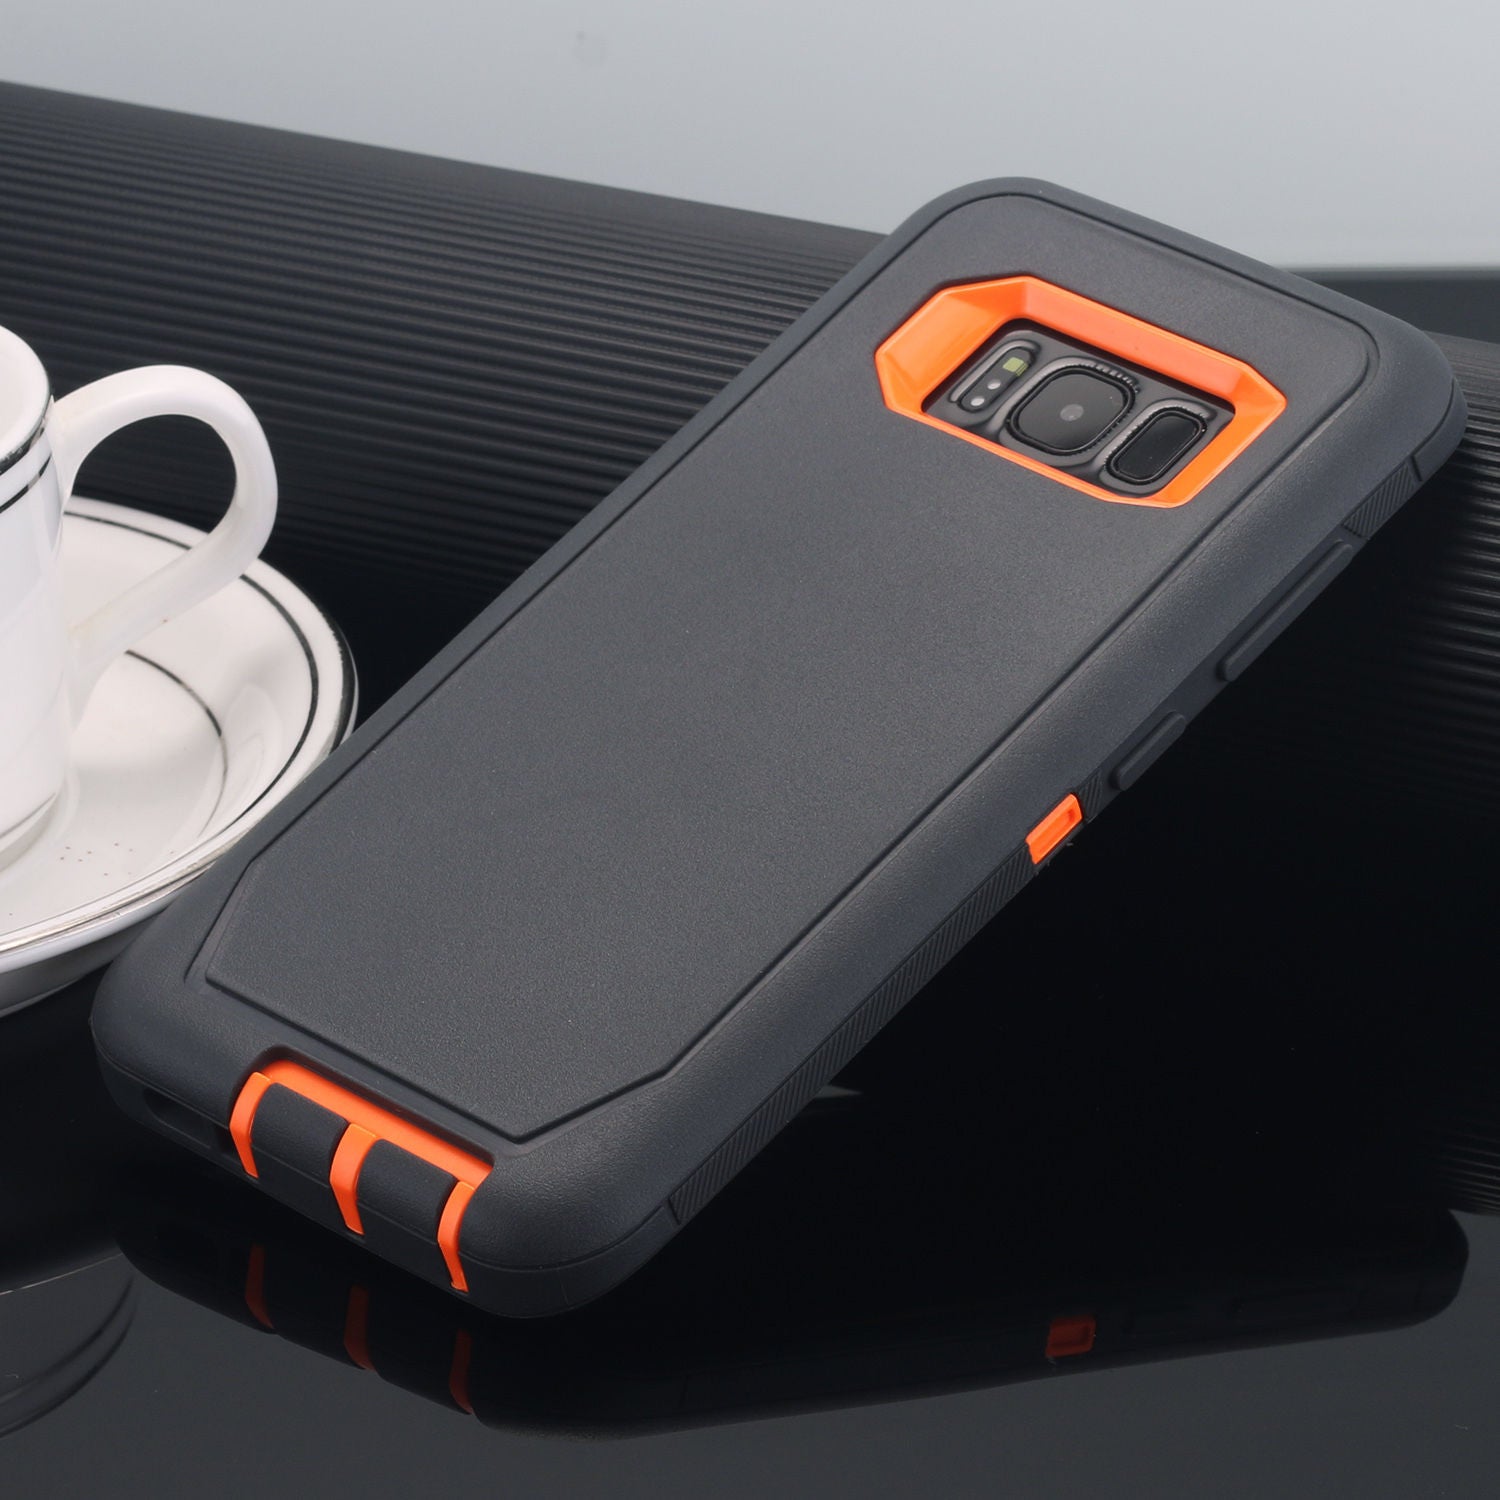 Samsung Galaxy S8 Plus Case Shockproof Hybrid Rubber Armor Rugged Cover-Dark Gray/Orange